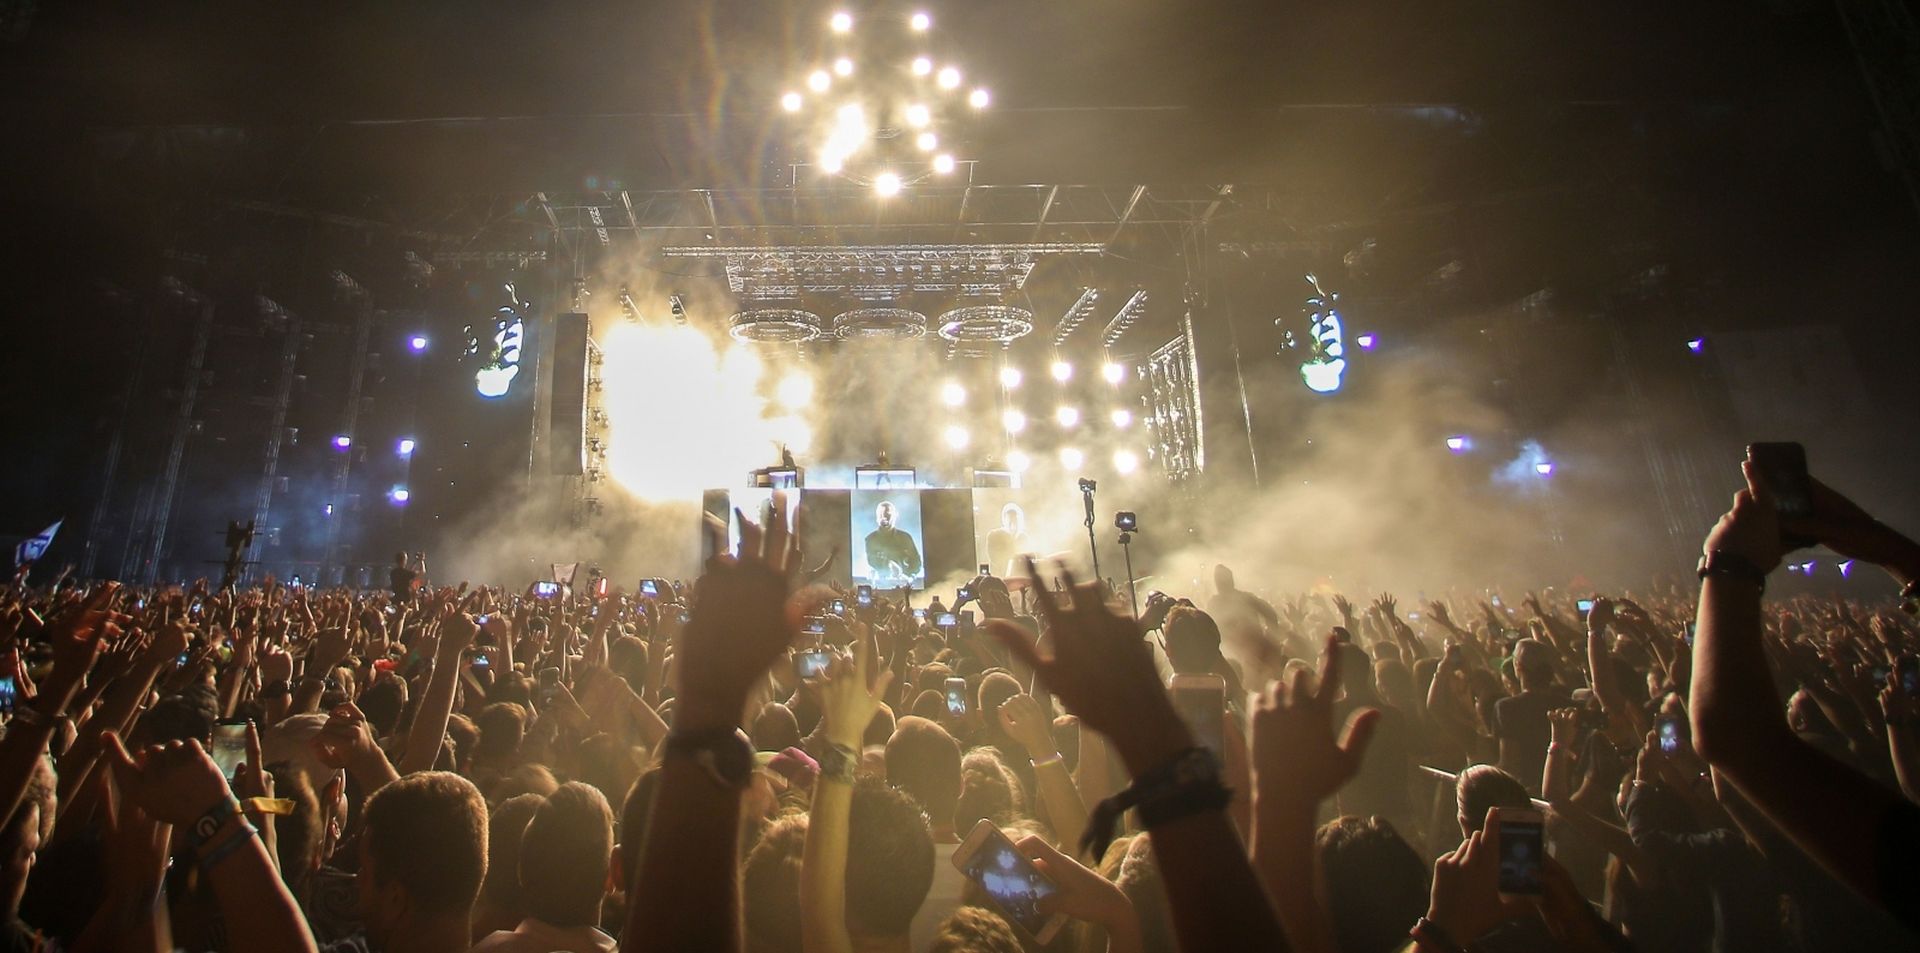 15.07.2019., Split - Treca vecer Ultra Europe festivala. Swedish House Mafia.
Photo: Borna Filic/PIXSELL